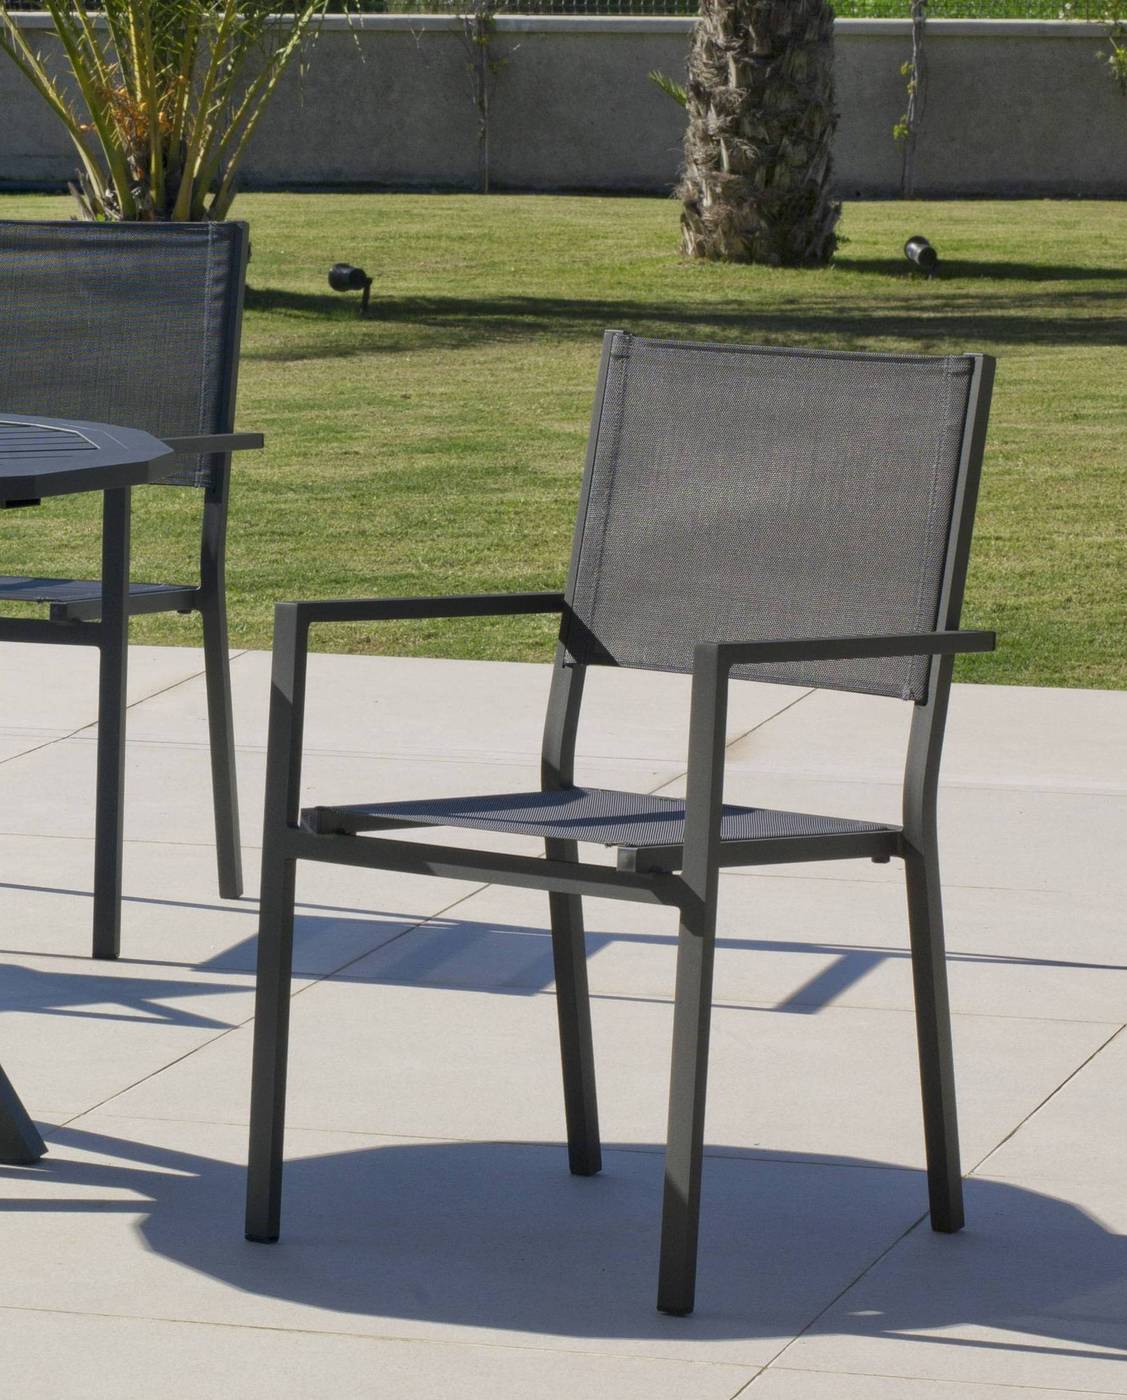 Set Aluminio Baracoa-Córcega 100-4 - Moderno conjunto de aluminio luxe: Mesa de comedor poligonal de 100 cm. + 4 sillones de textilen. Disponible en color blanco, plata y antracita.